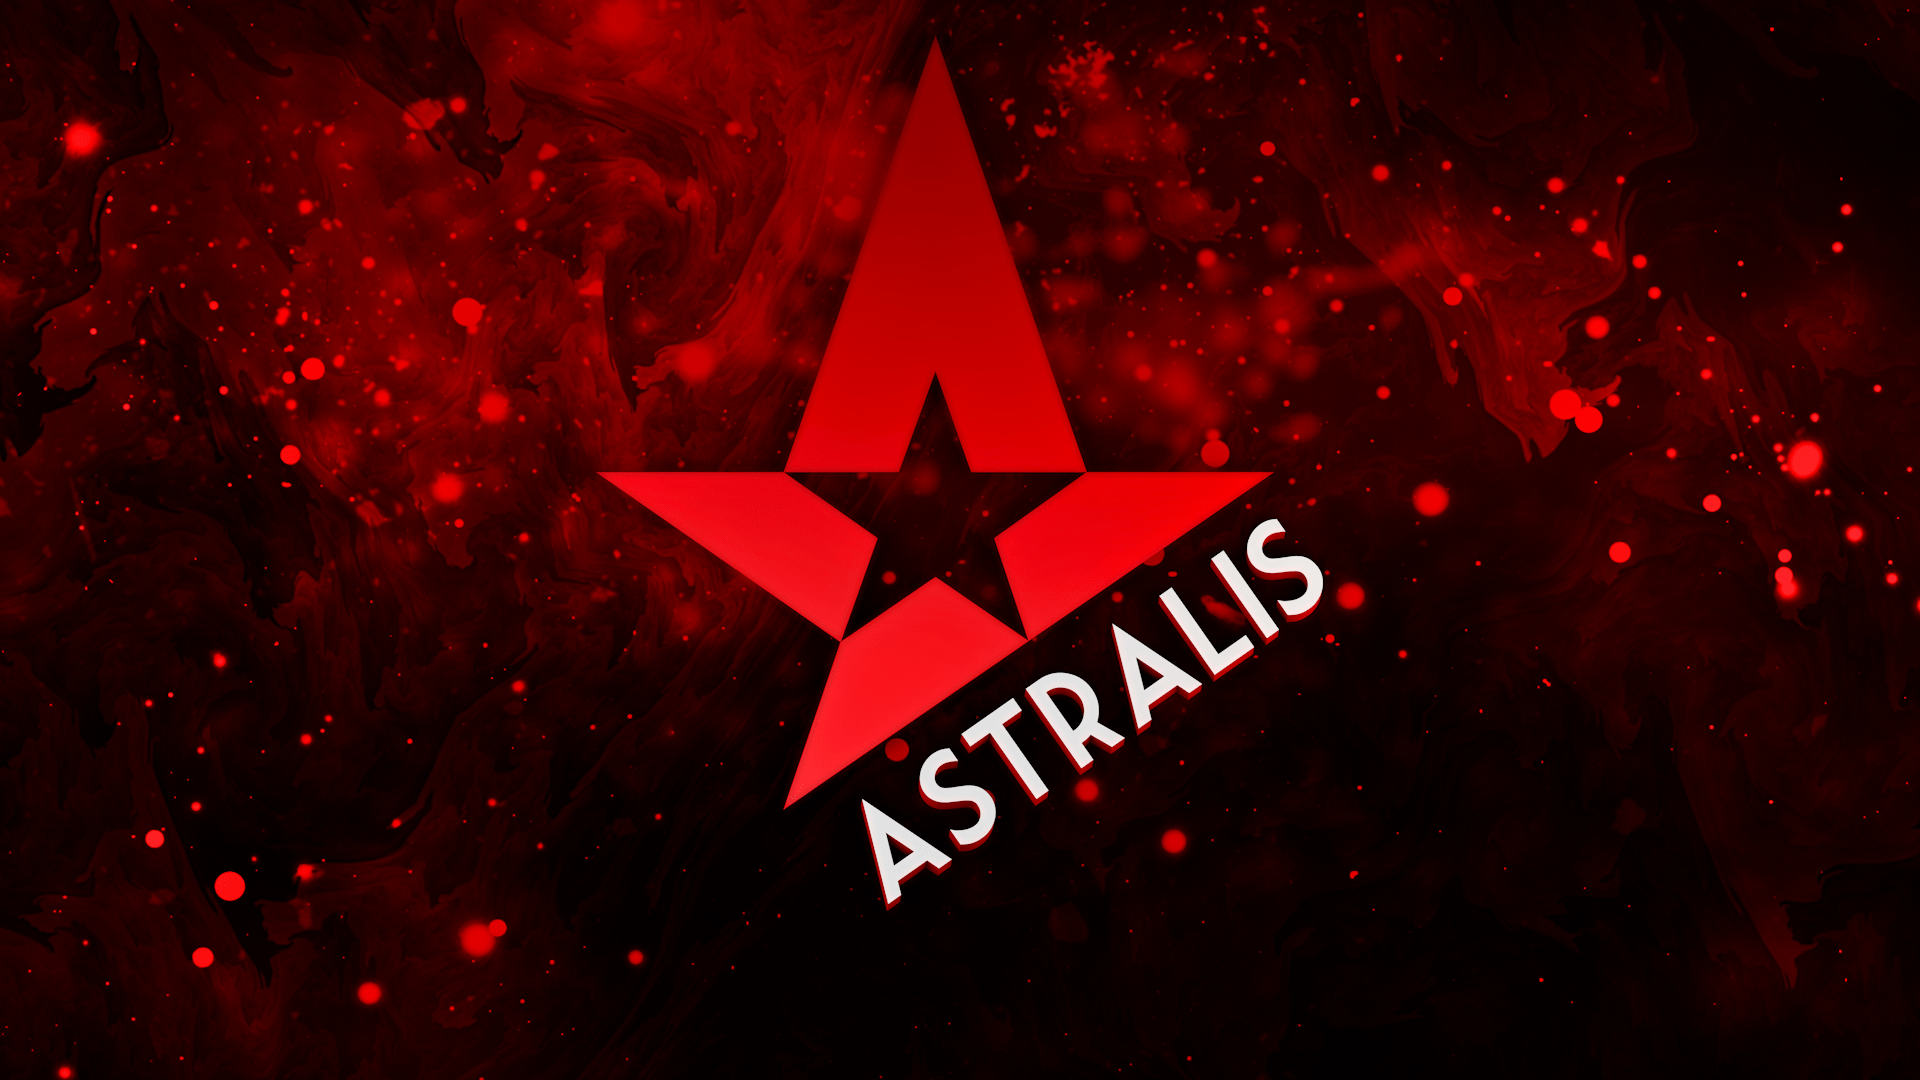 Team astralis. Астралис 2022. Ава астралис. Наклейка астралис. Логотип команды астралис КС го.